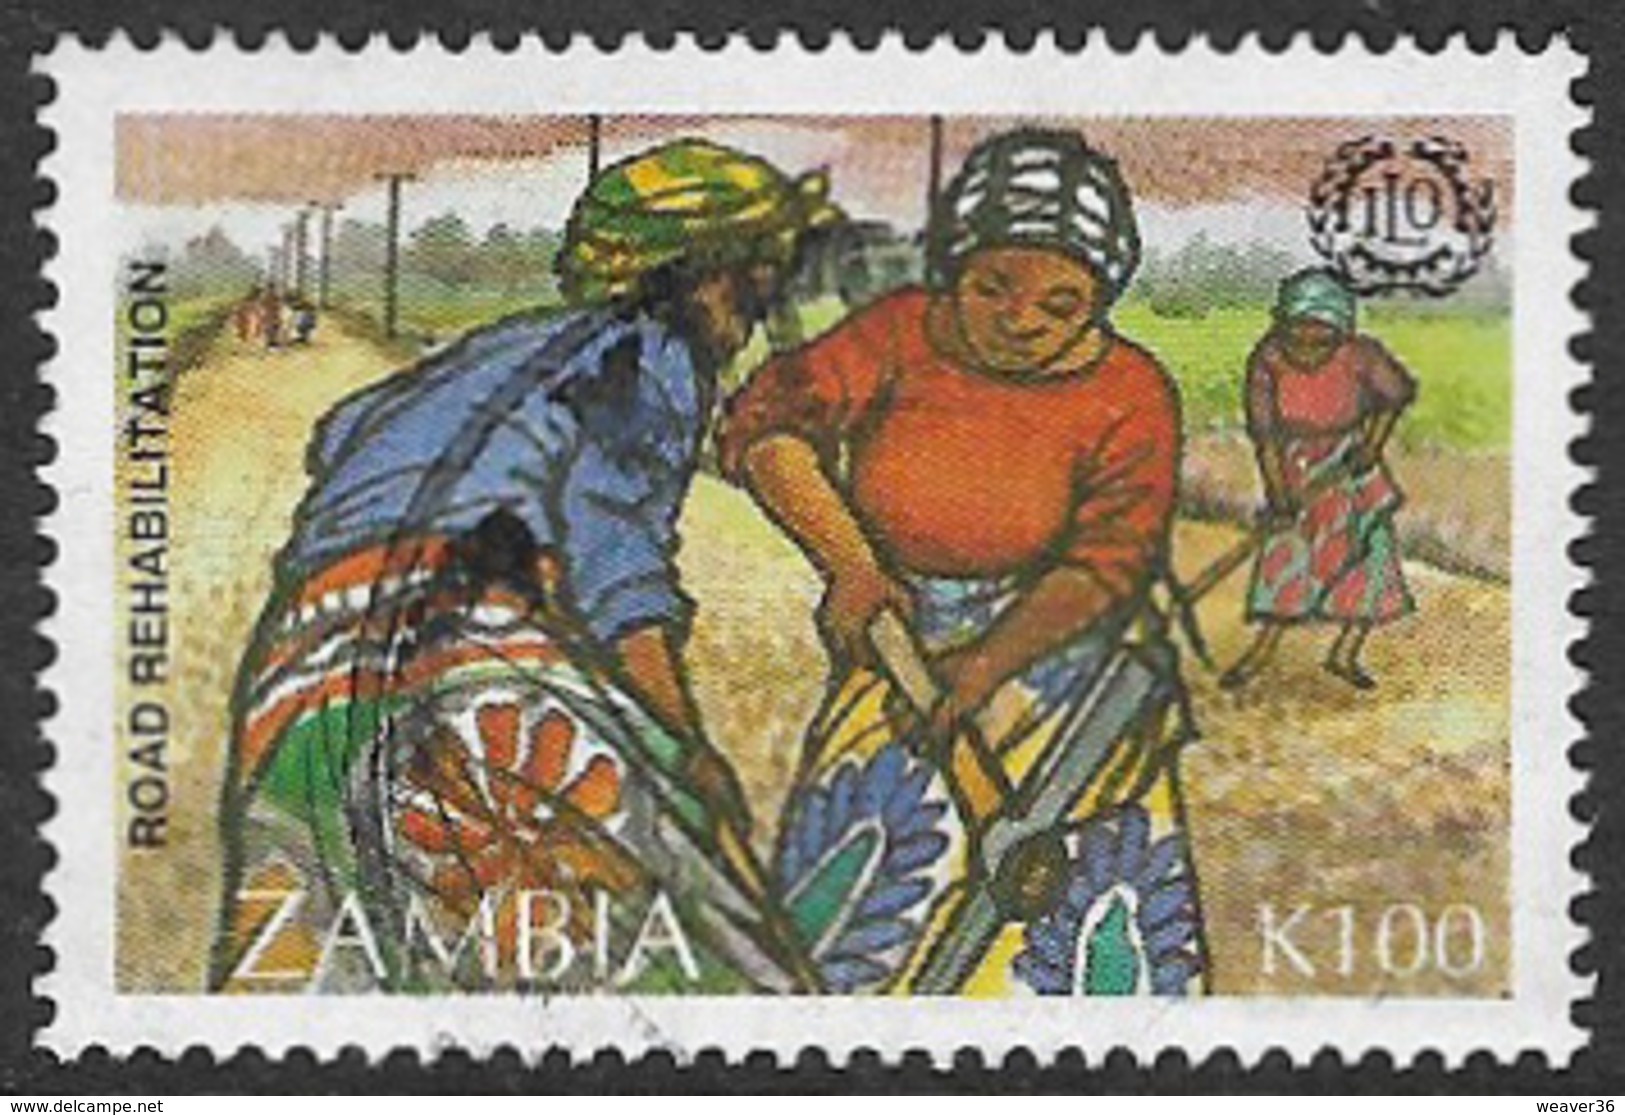 Zambia SG743 1995 75th Anniversary Of International Labour Organization 100k Good/fine Used [37/30801/2D] - Zambia (1965-...)